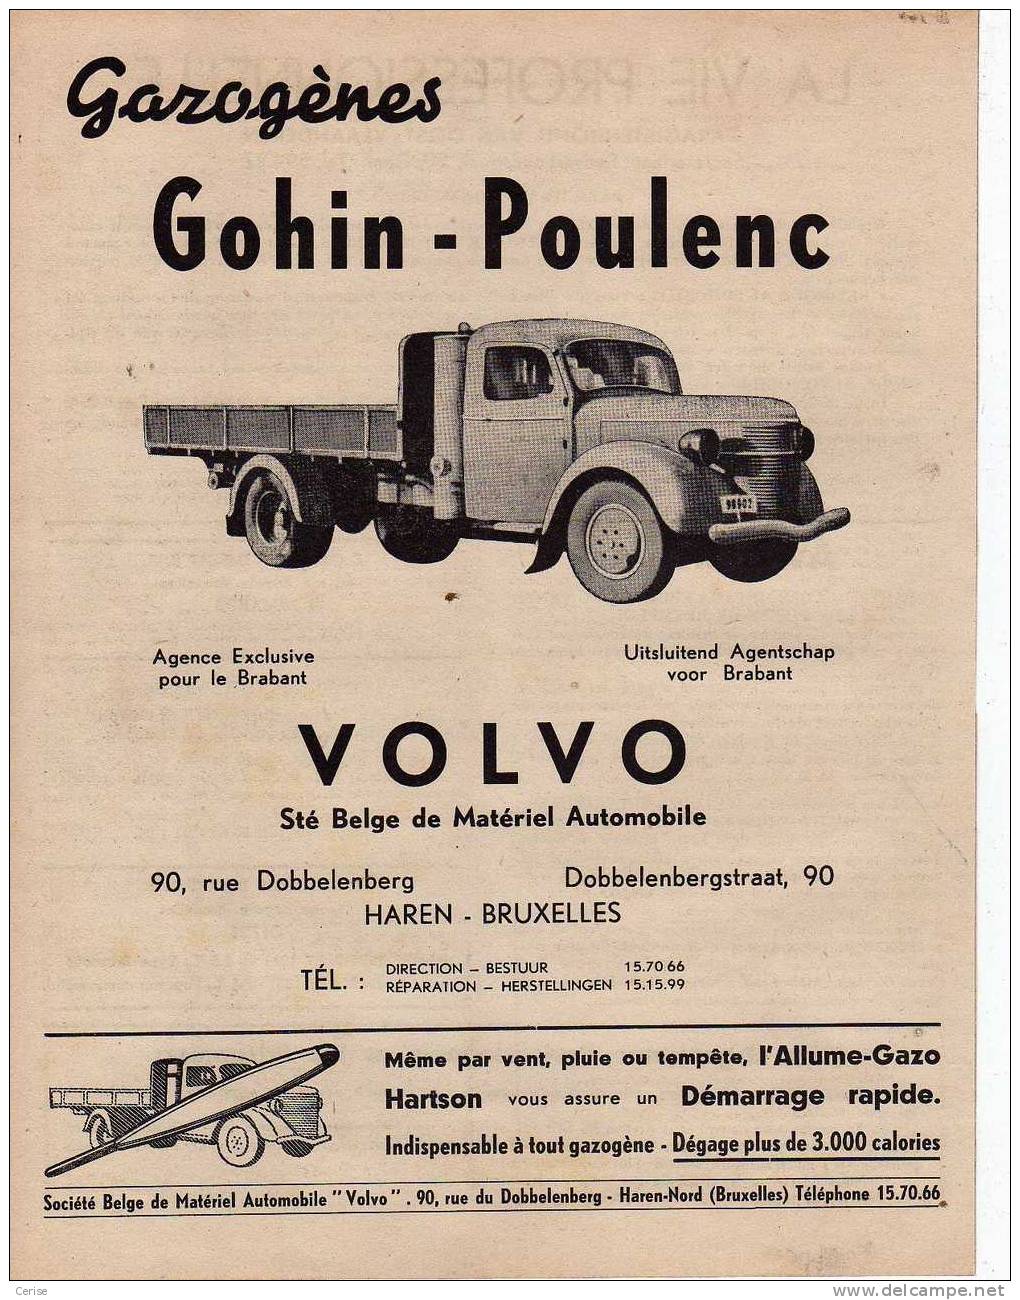 Gazogènes GOHIN-POULENC - Haren - Bruxelles - Advertising